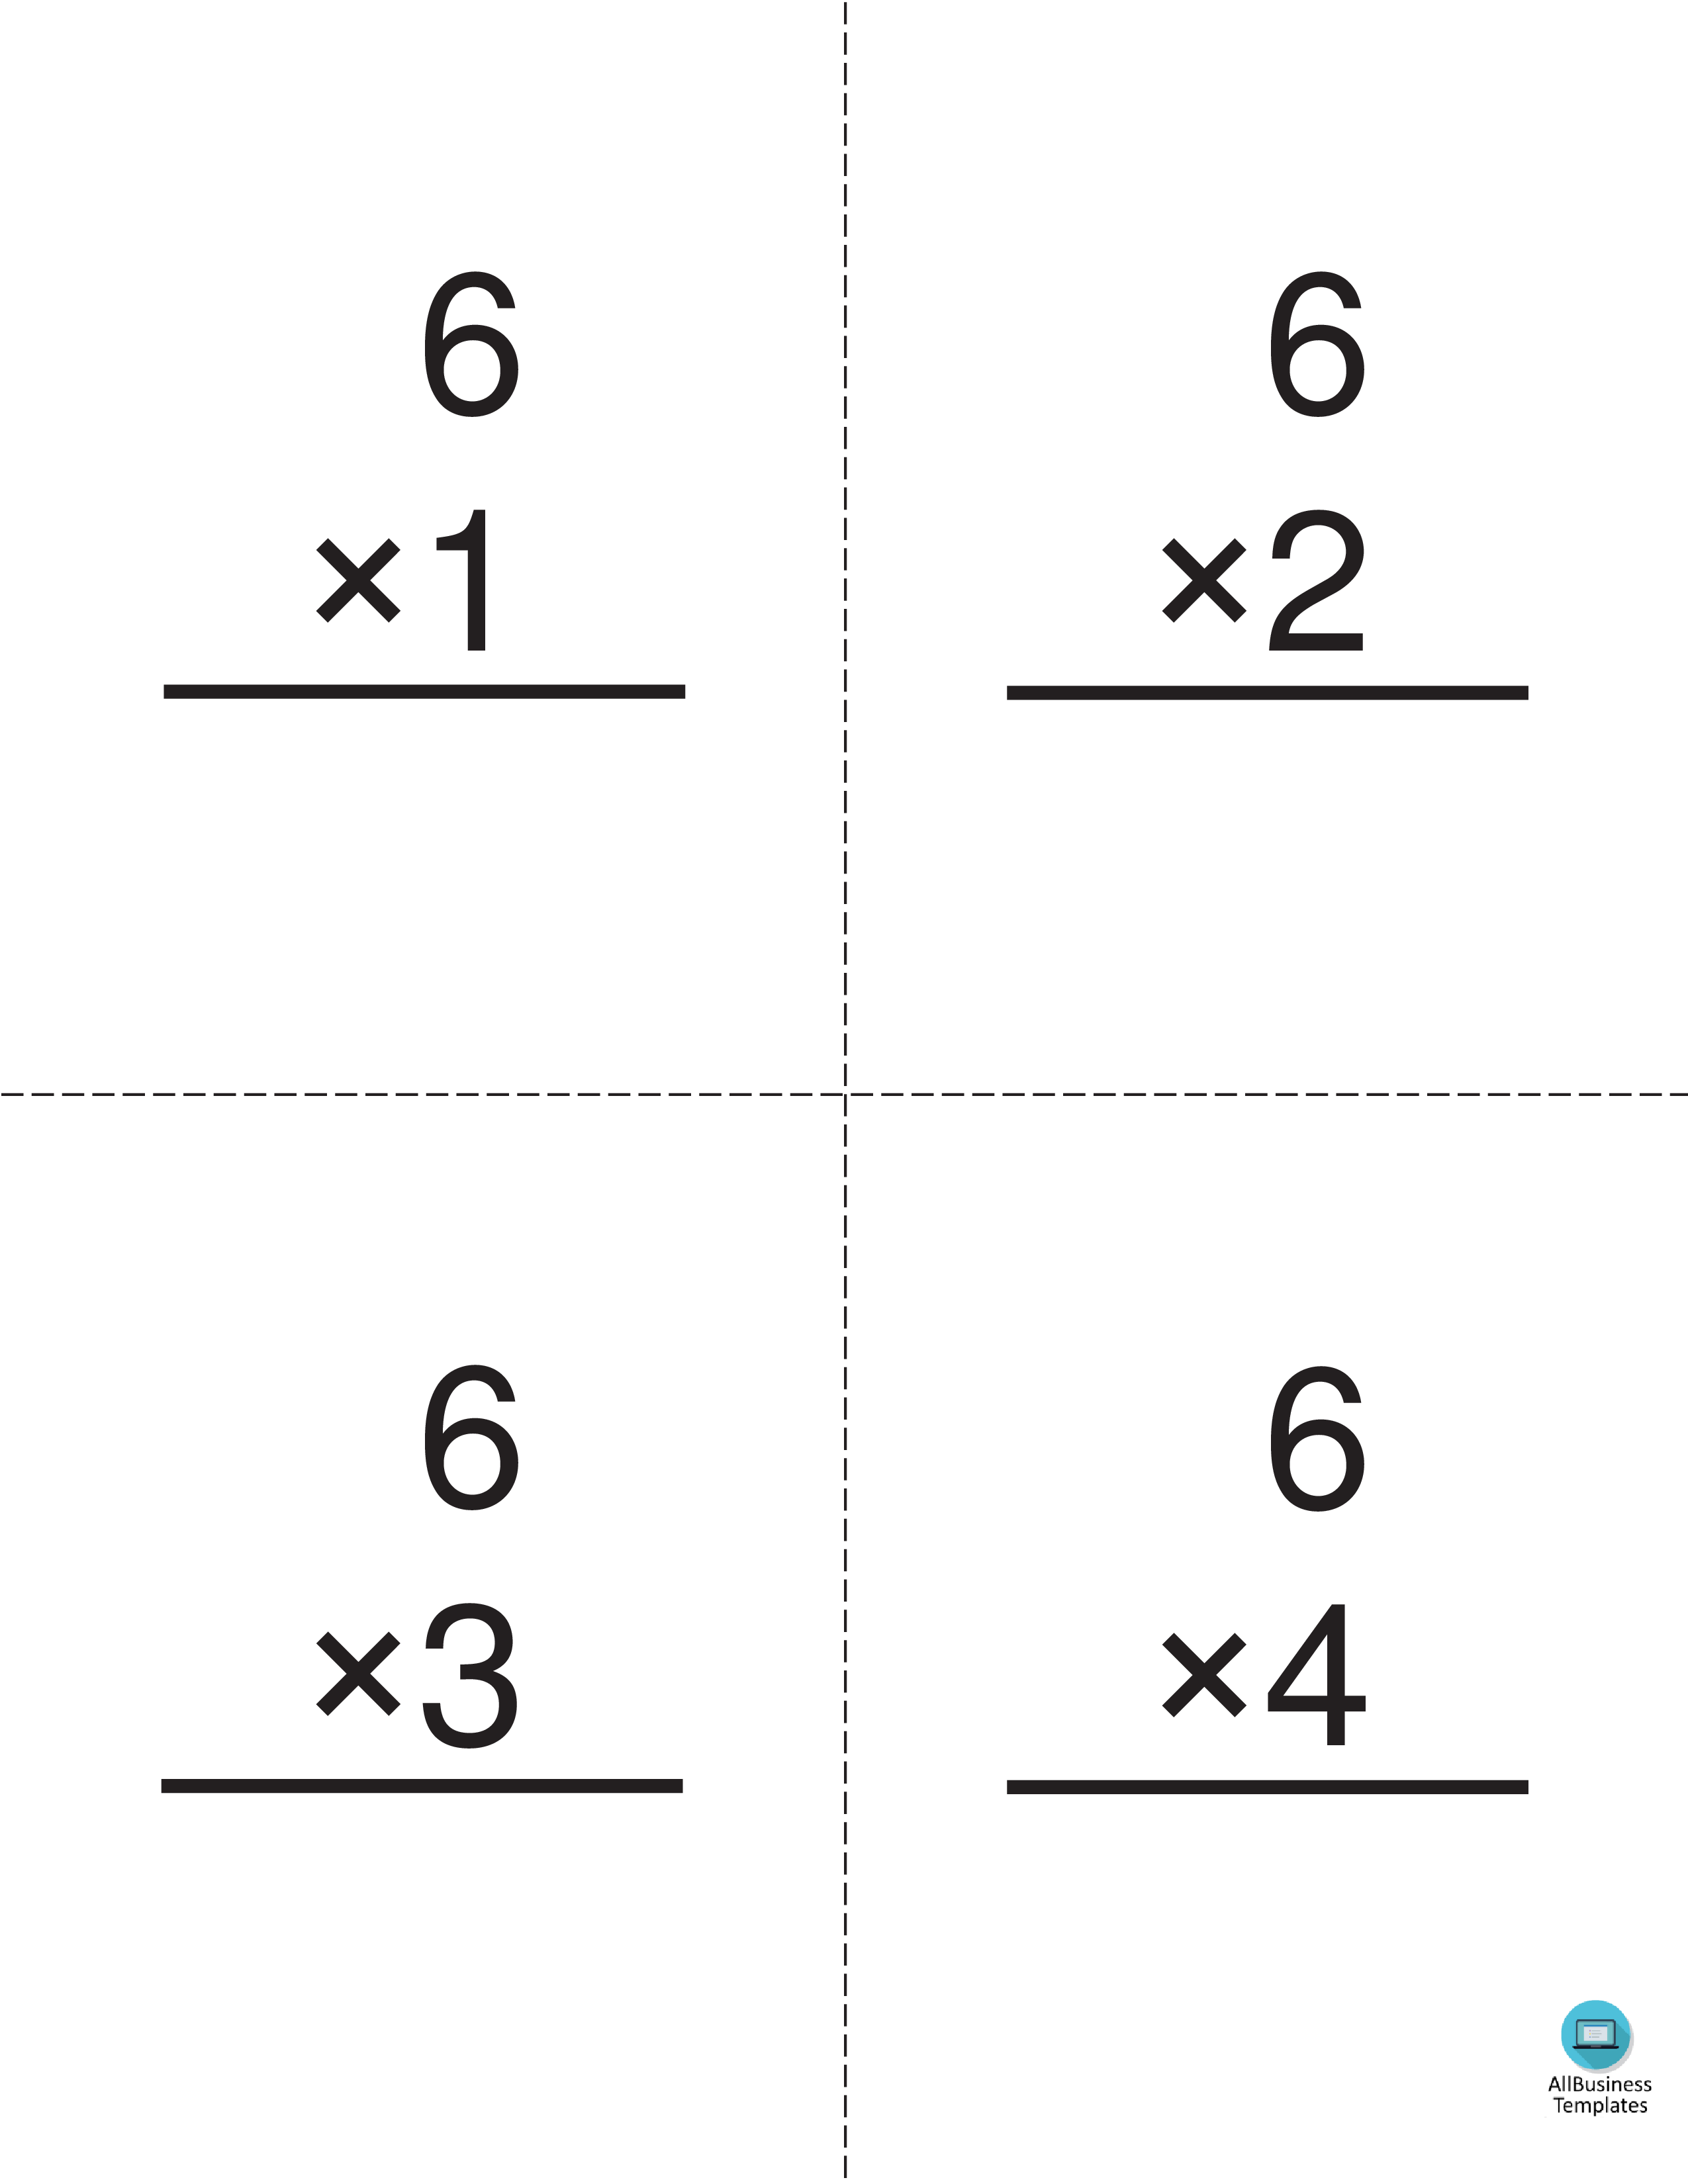 Multiplication times 6 flashcards main image